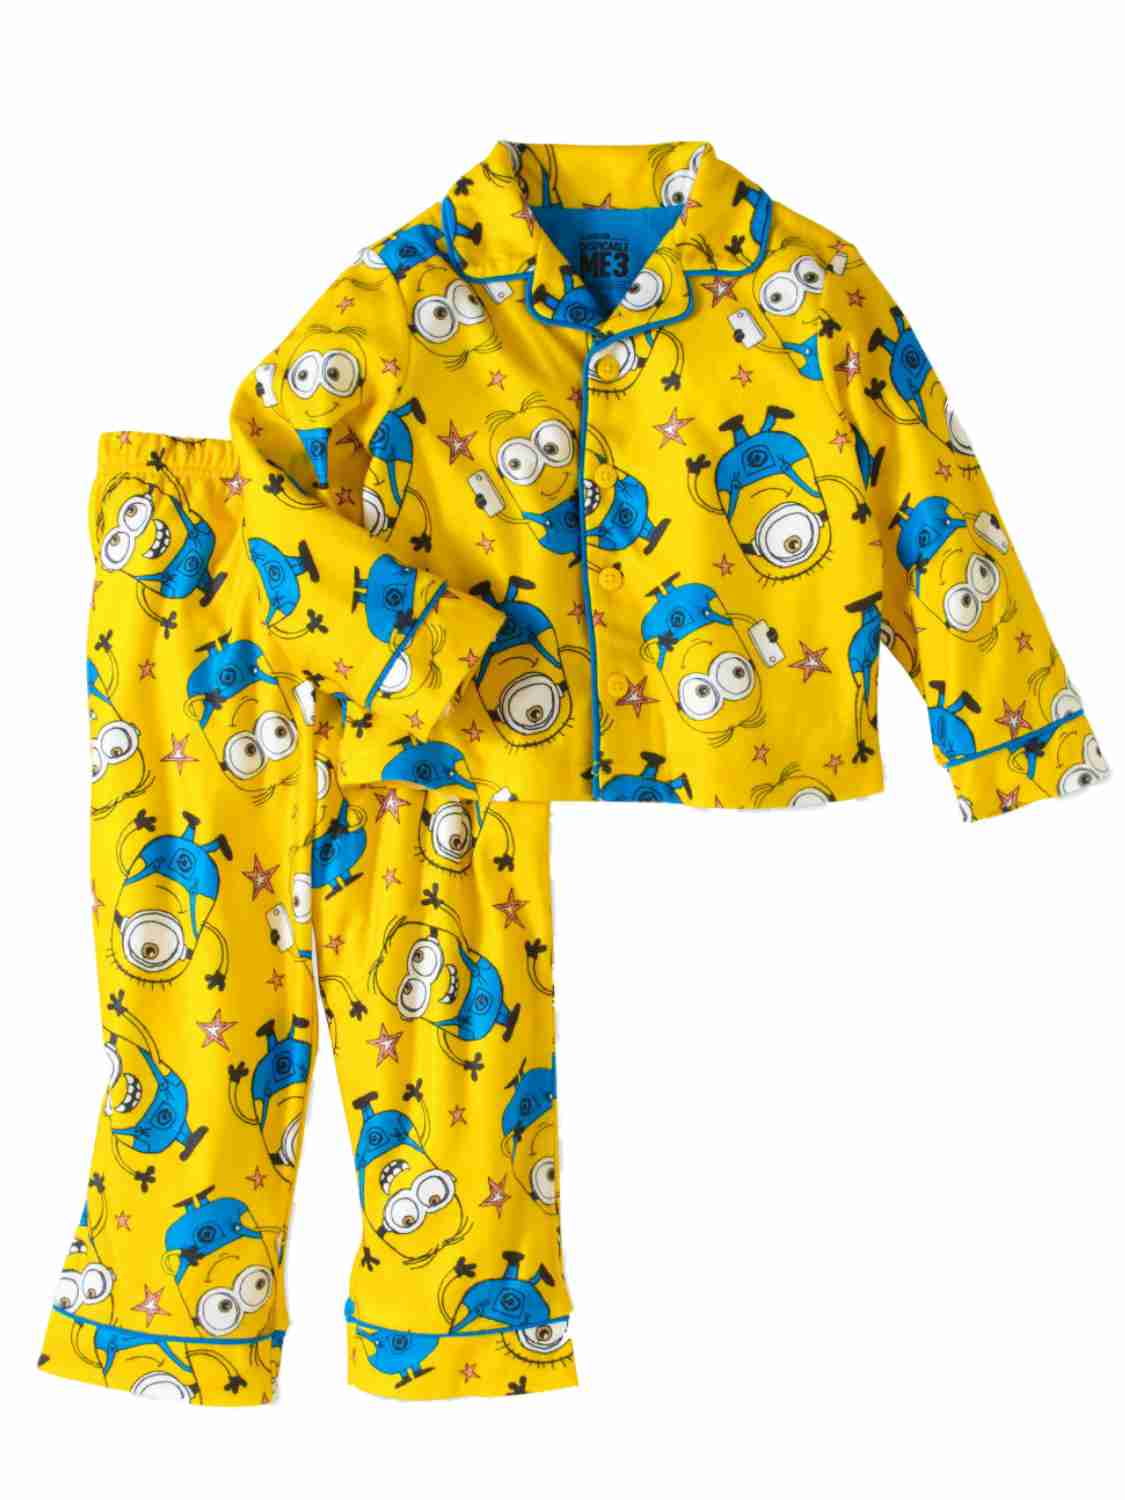 Despicable Me Toddler Boys Yellow Flannel Minions Pajamas Sleep Set 